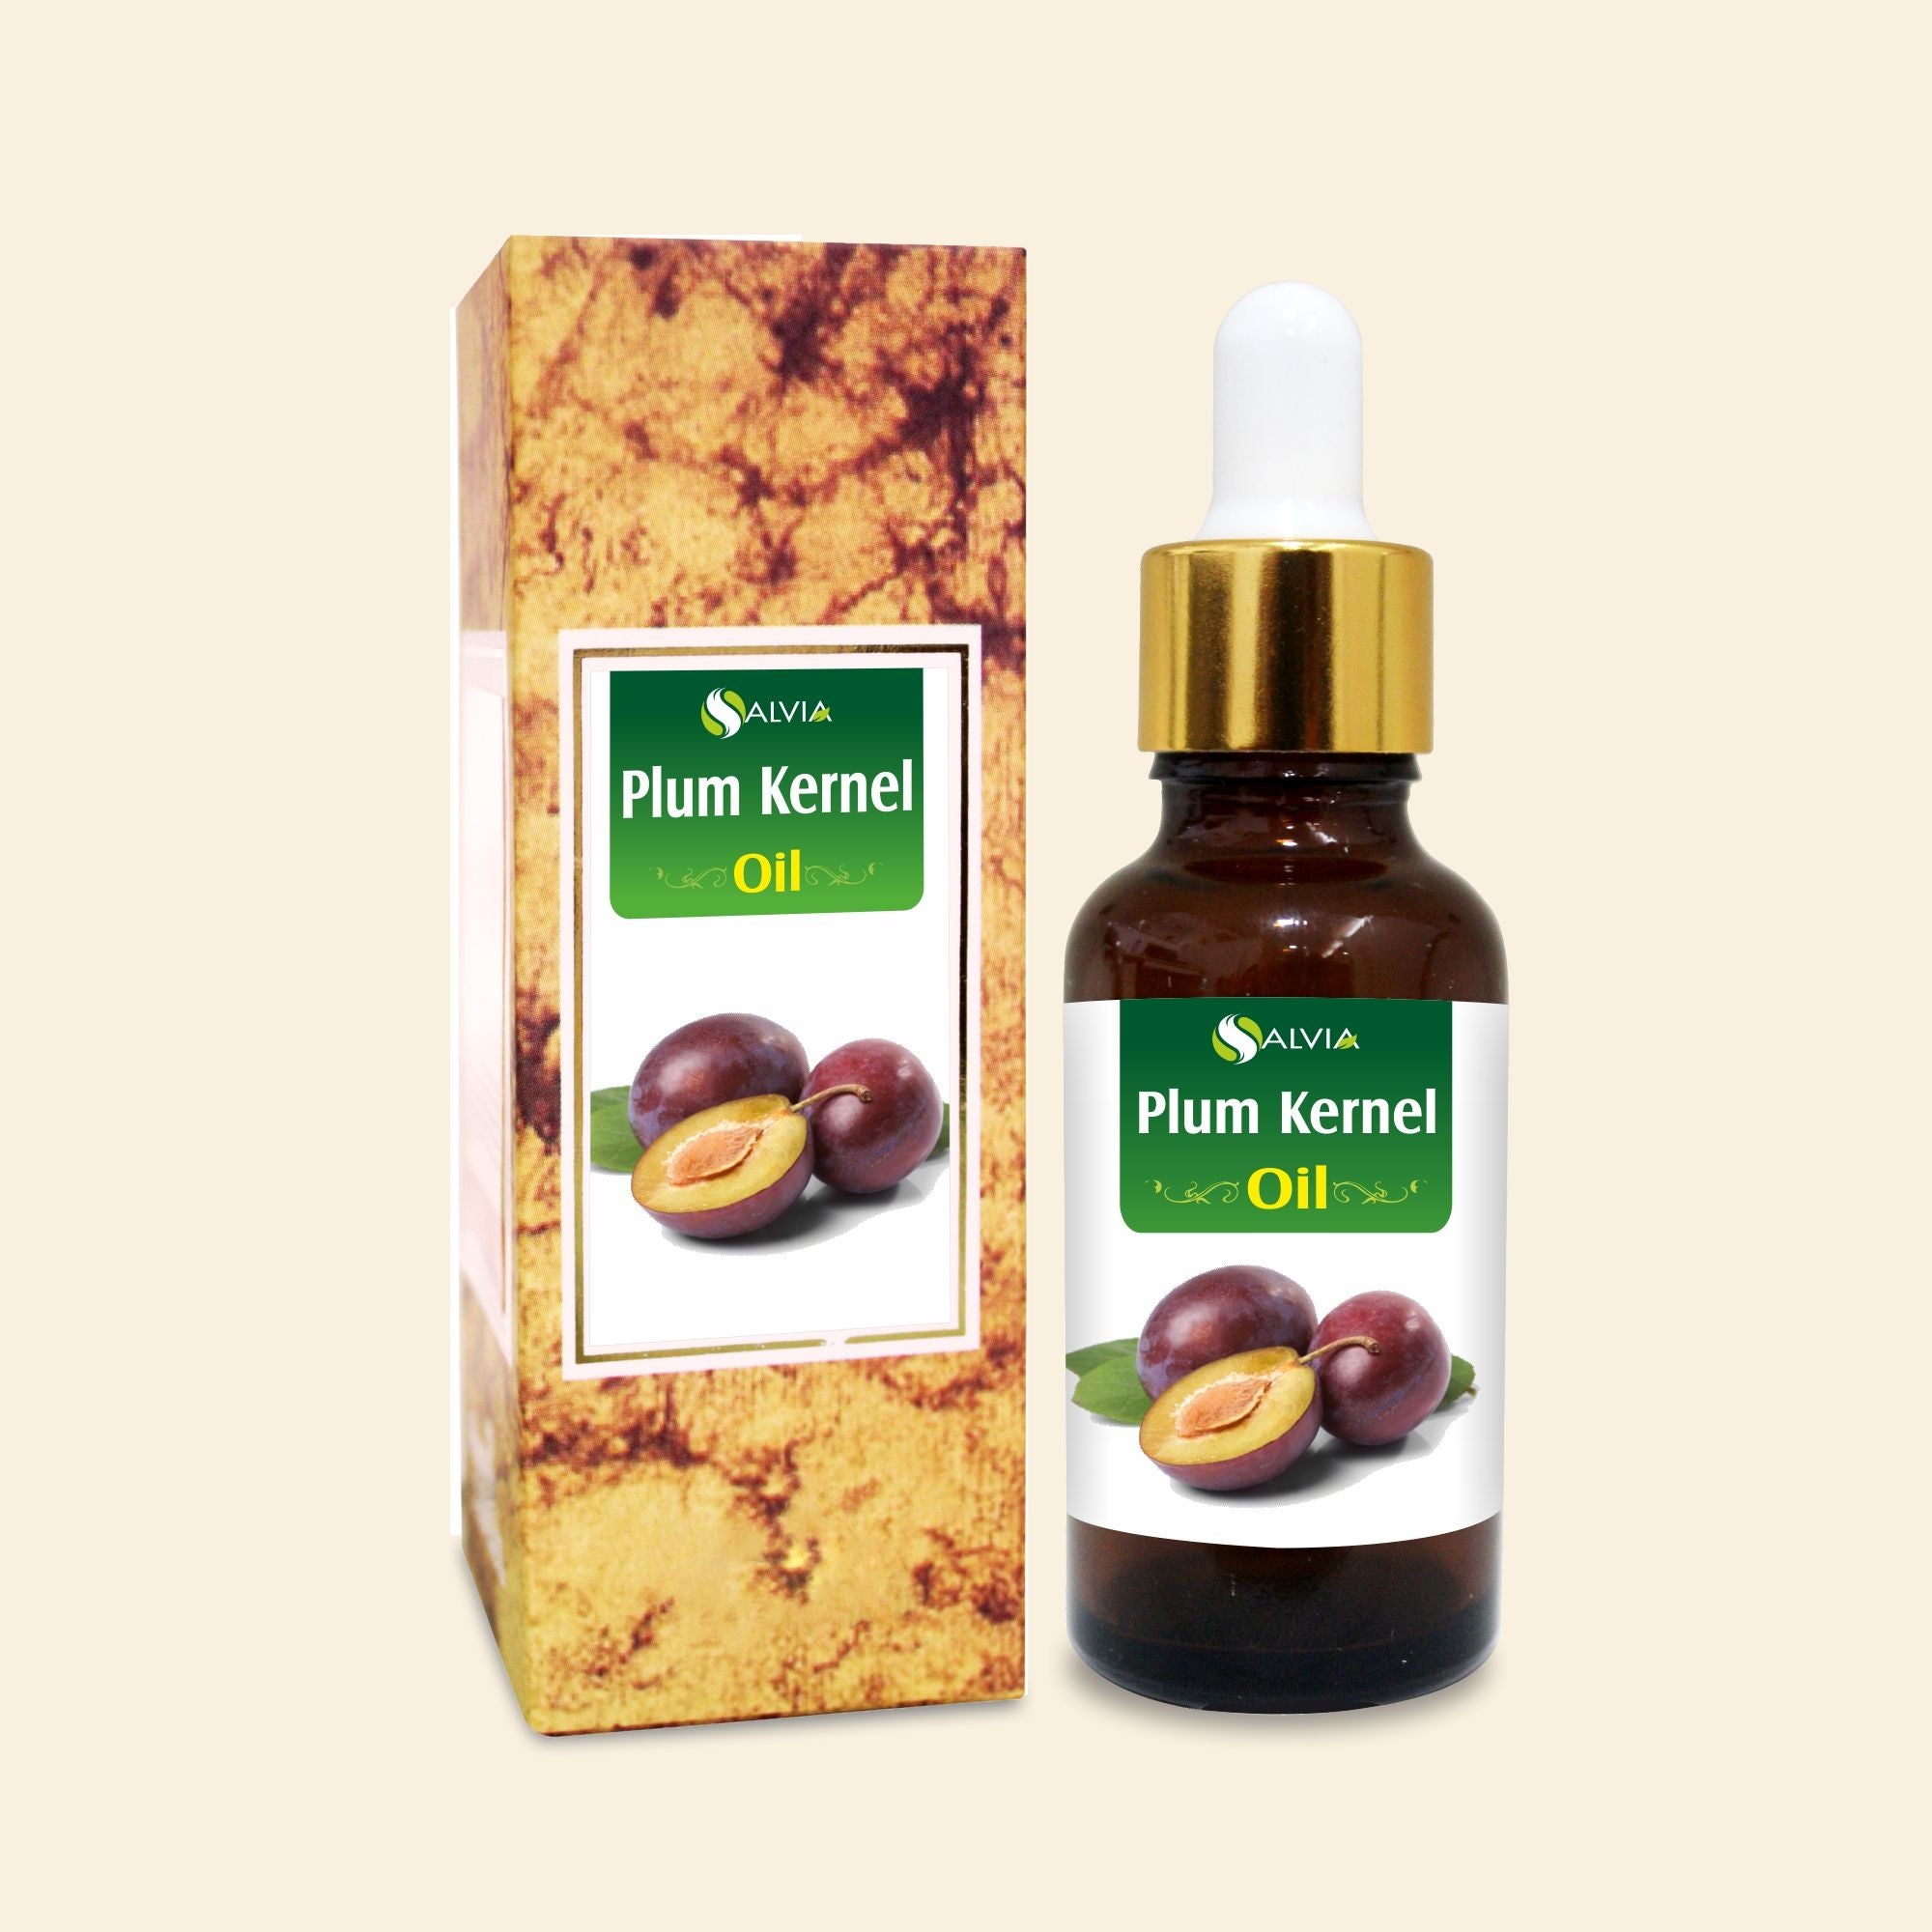 Salvia Natural Carrier Oils Plum Kernel Oil